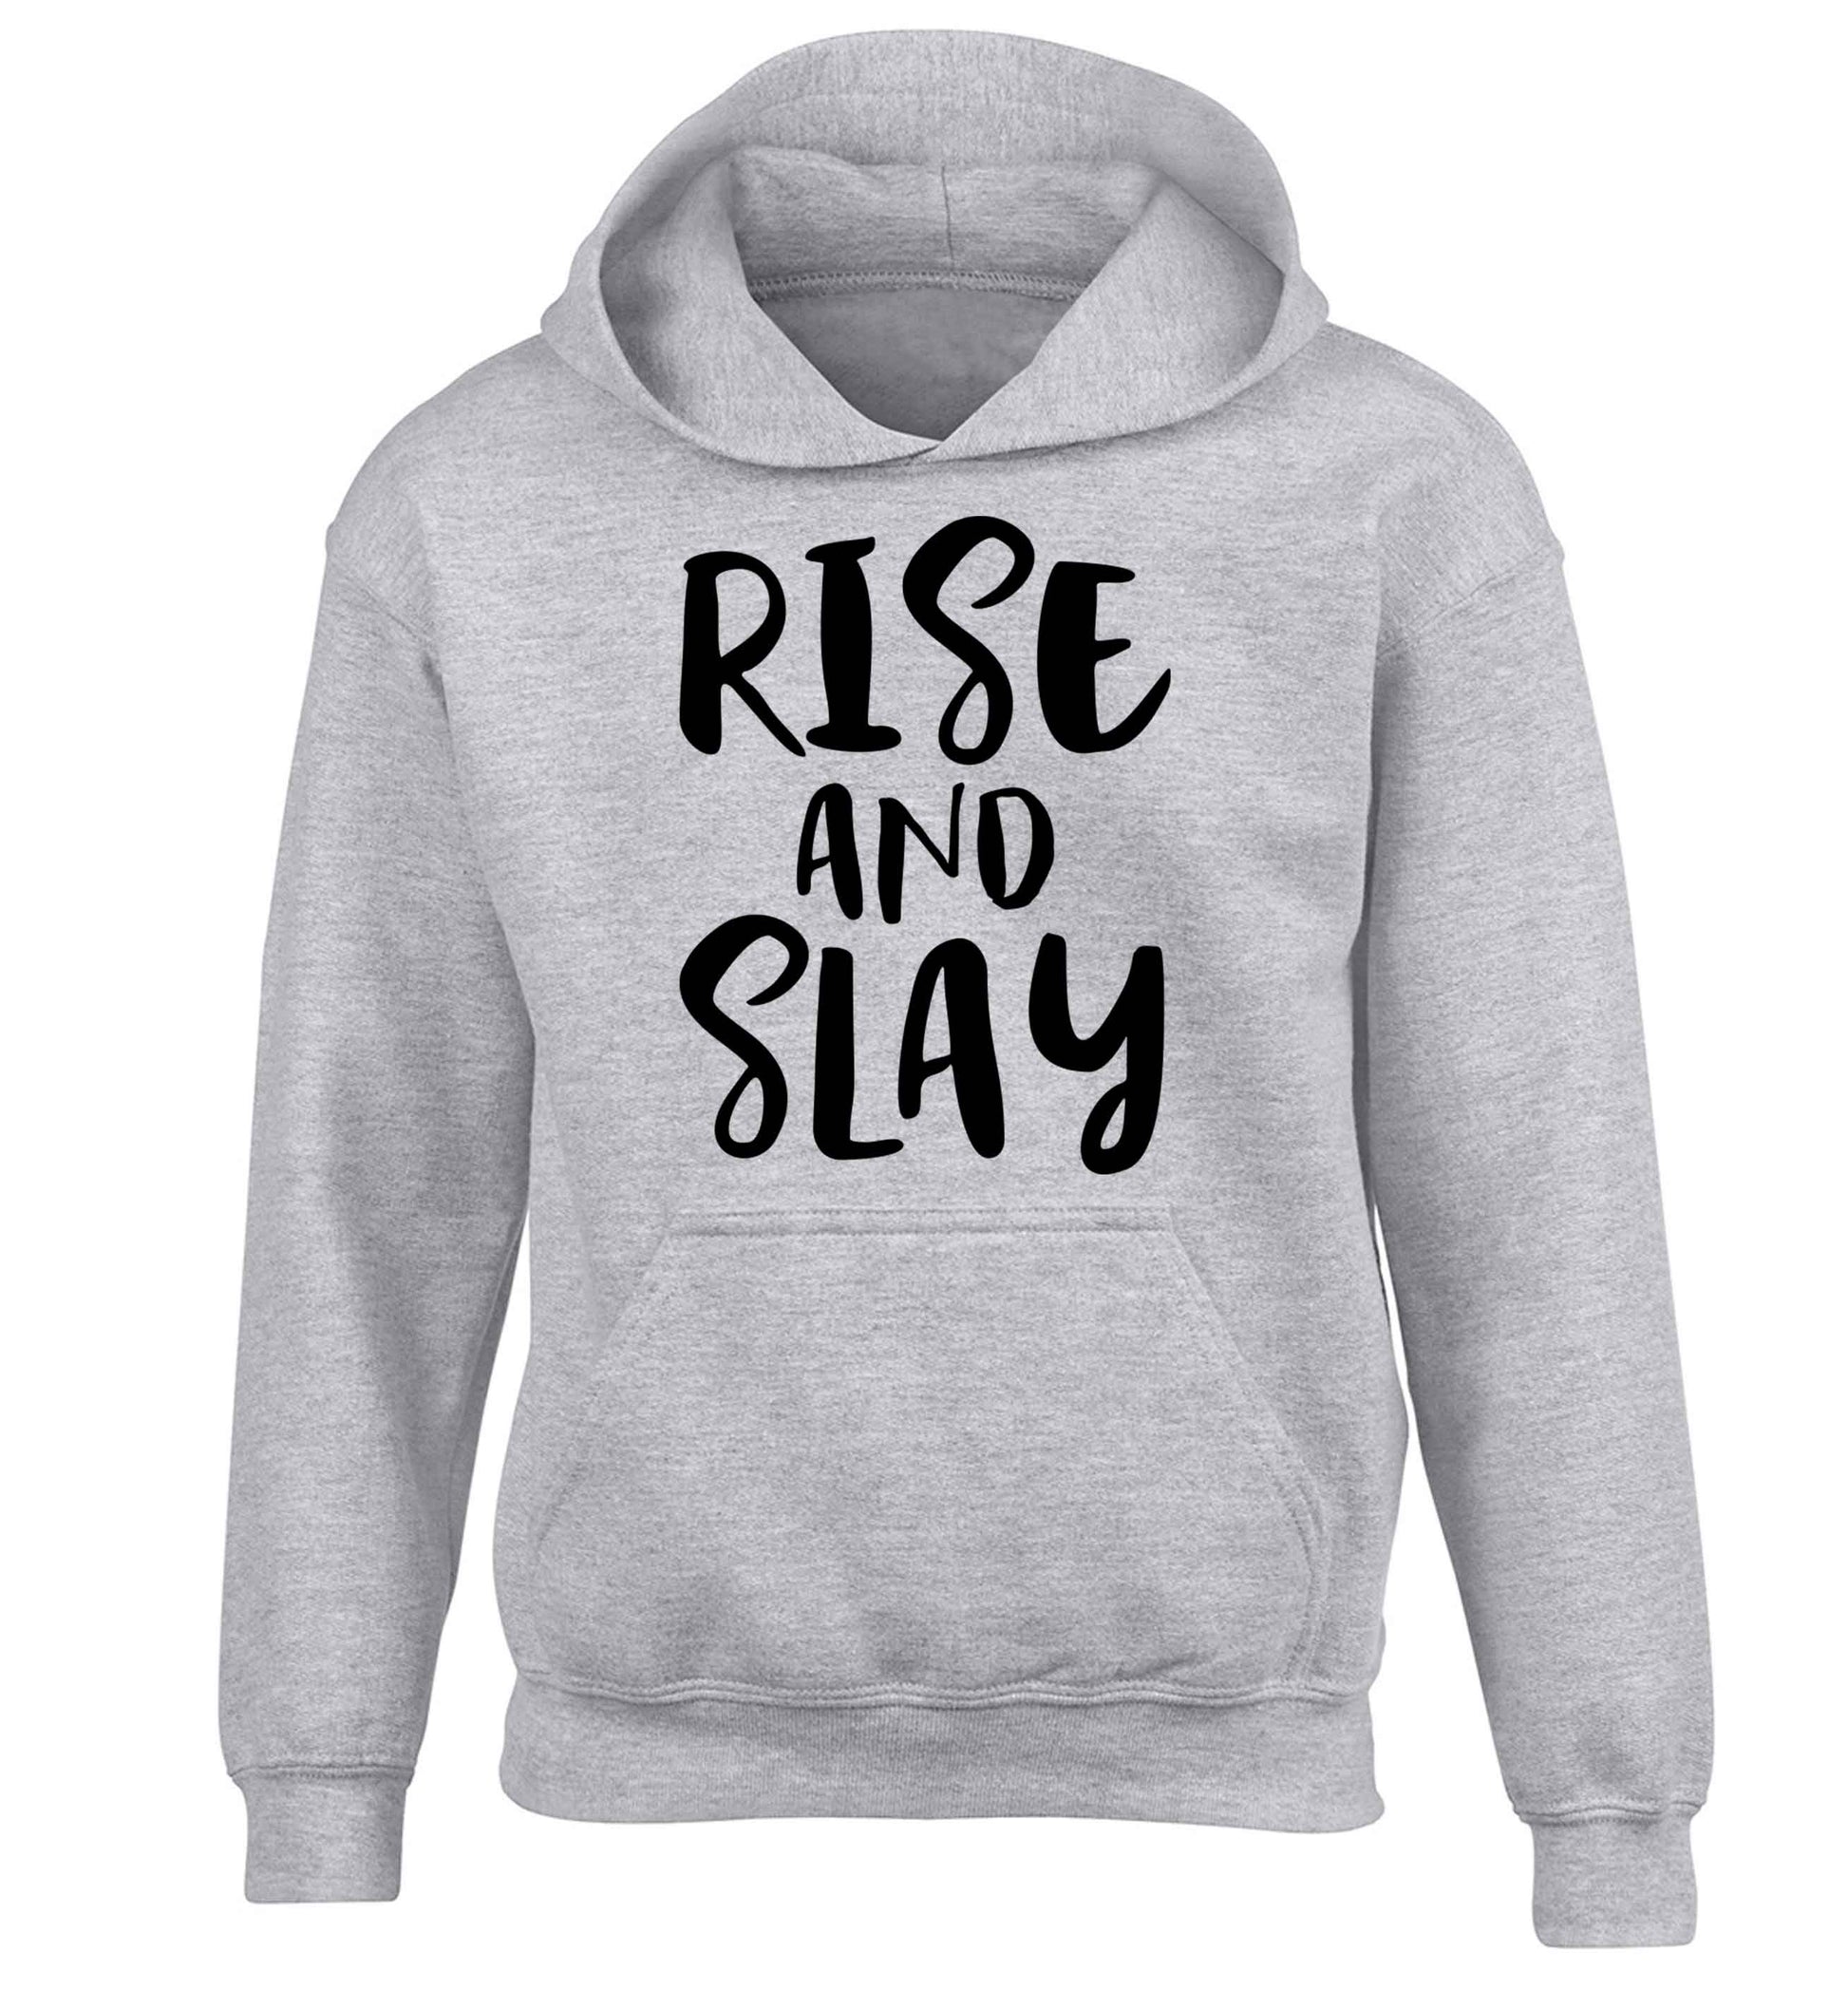 Rise and slay children's grey hoodie 12-13 Years